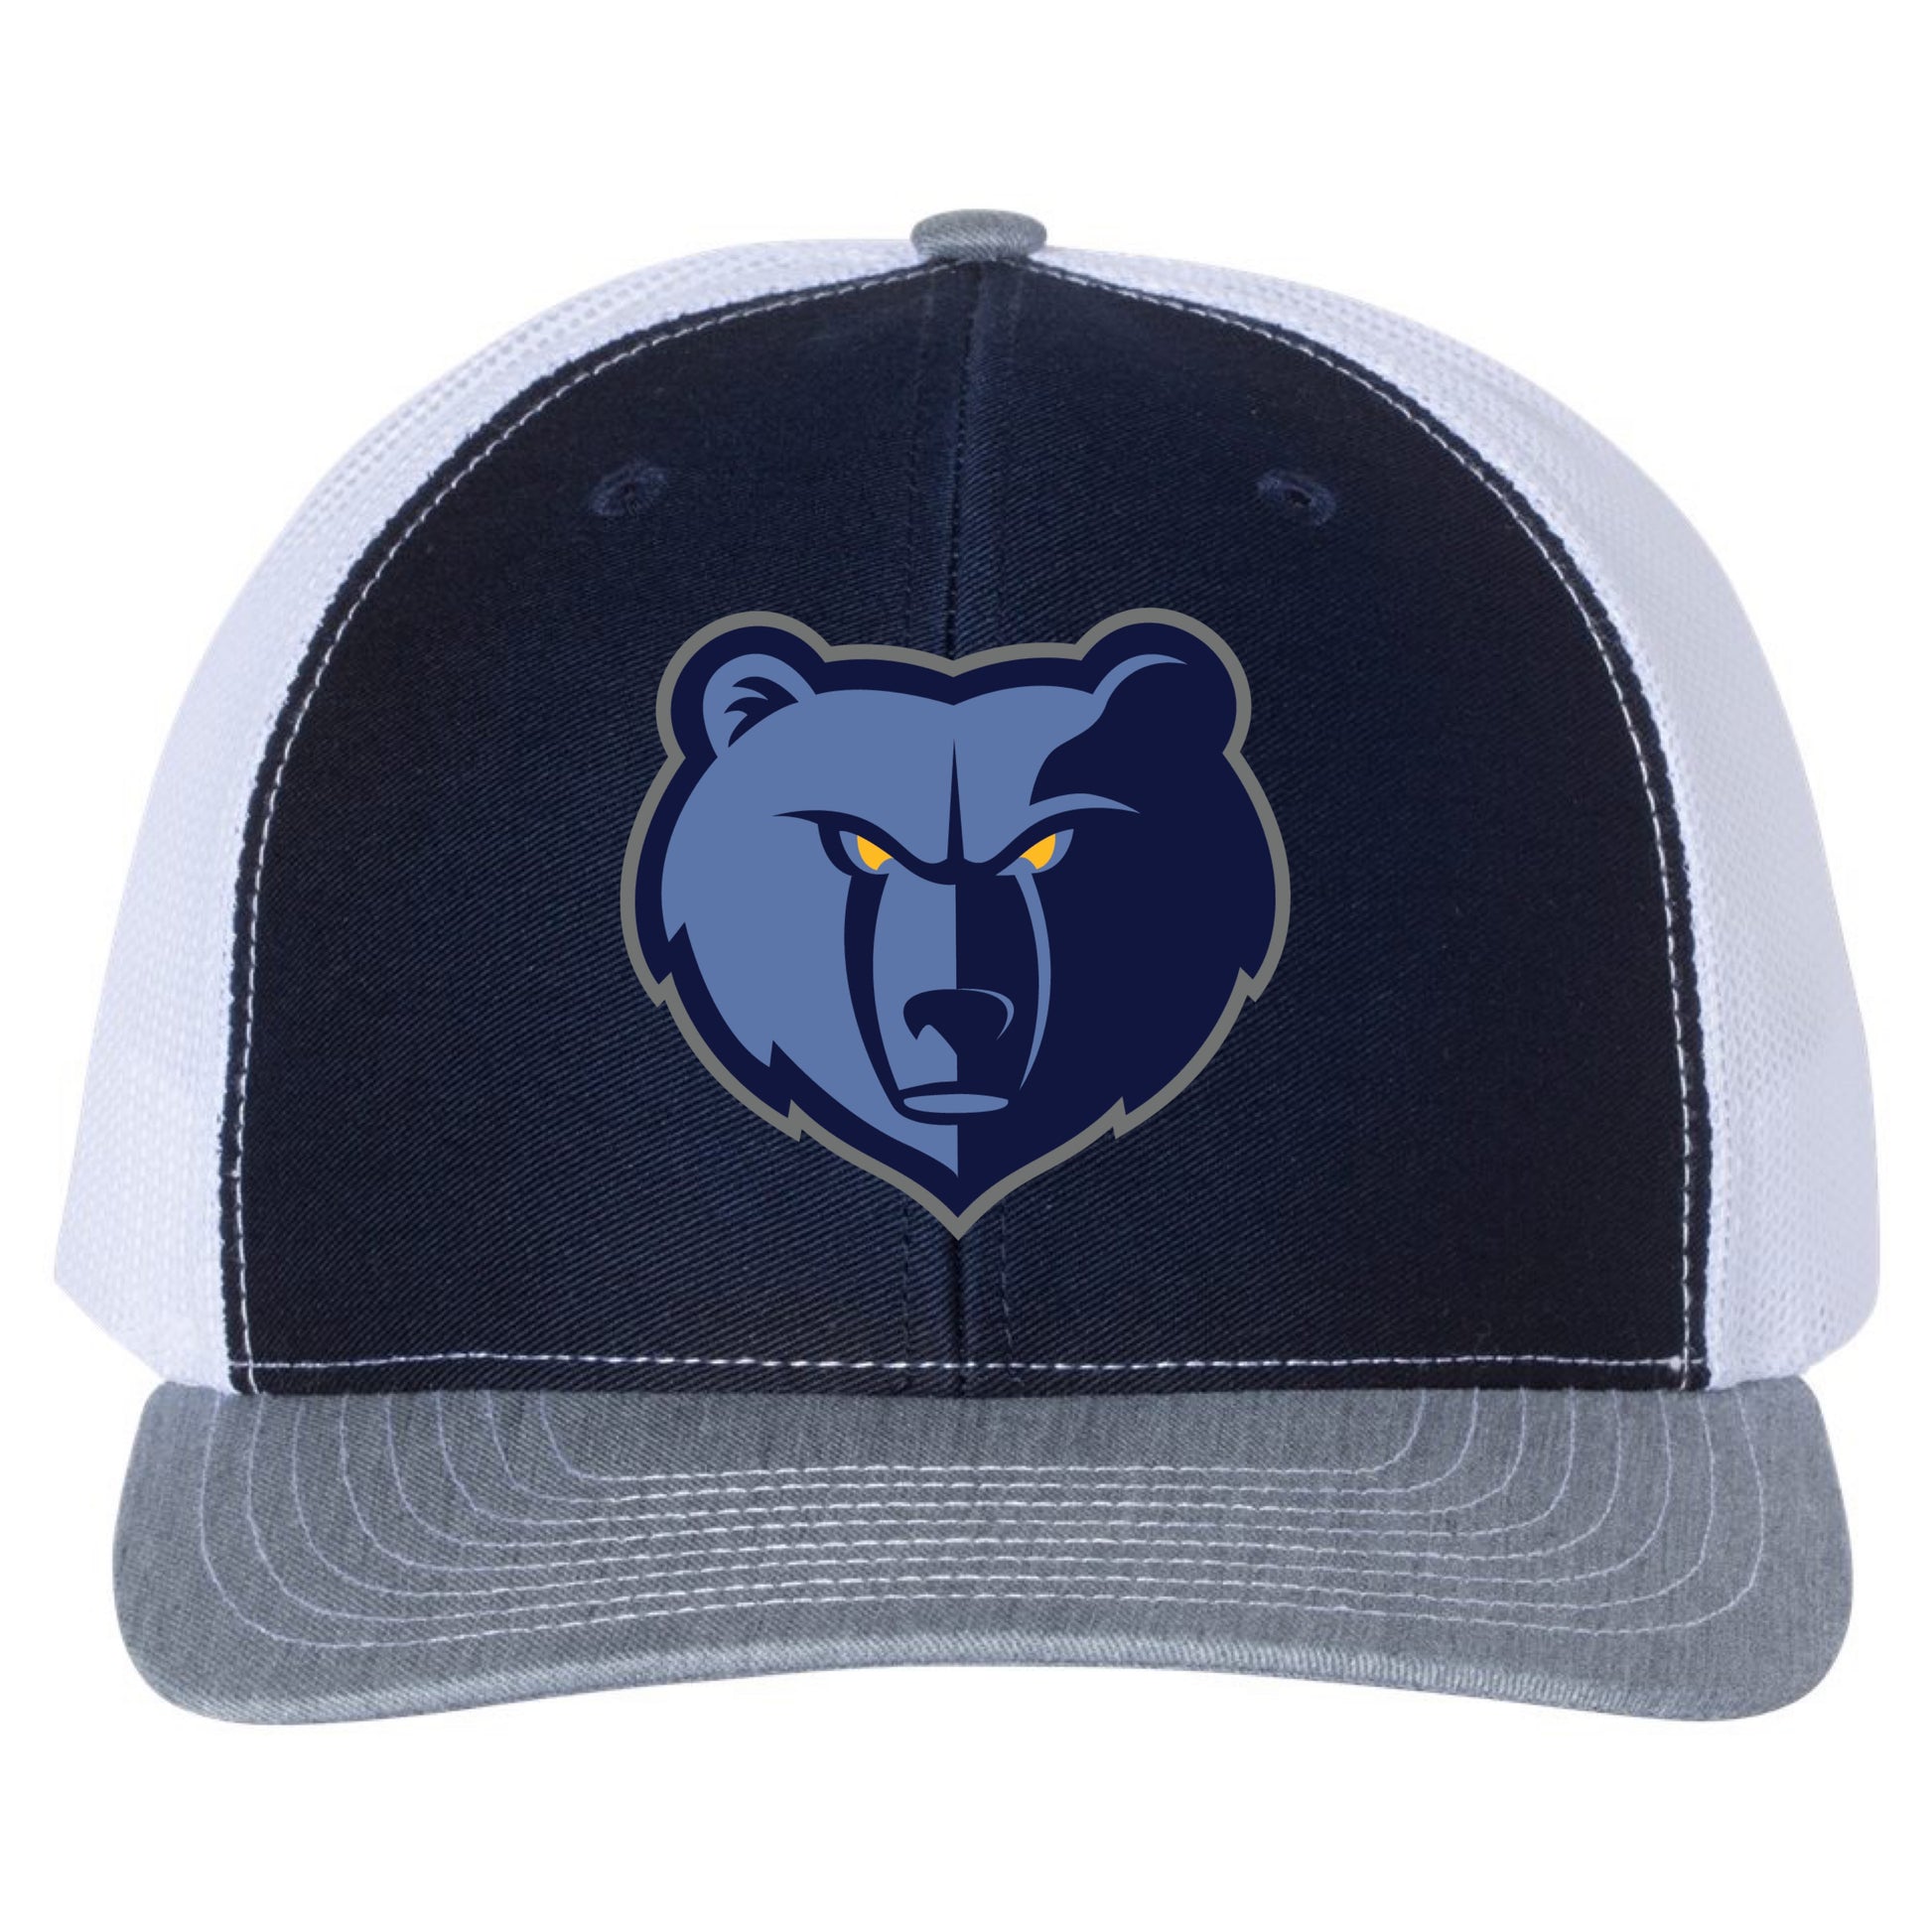 Memphis Grizzlies 3D Snapback Trucker Hat- Navy/ White/ Heather Grey - Ten Gallon Hat Co.